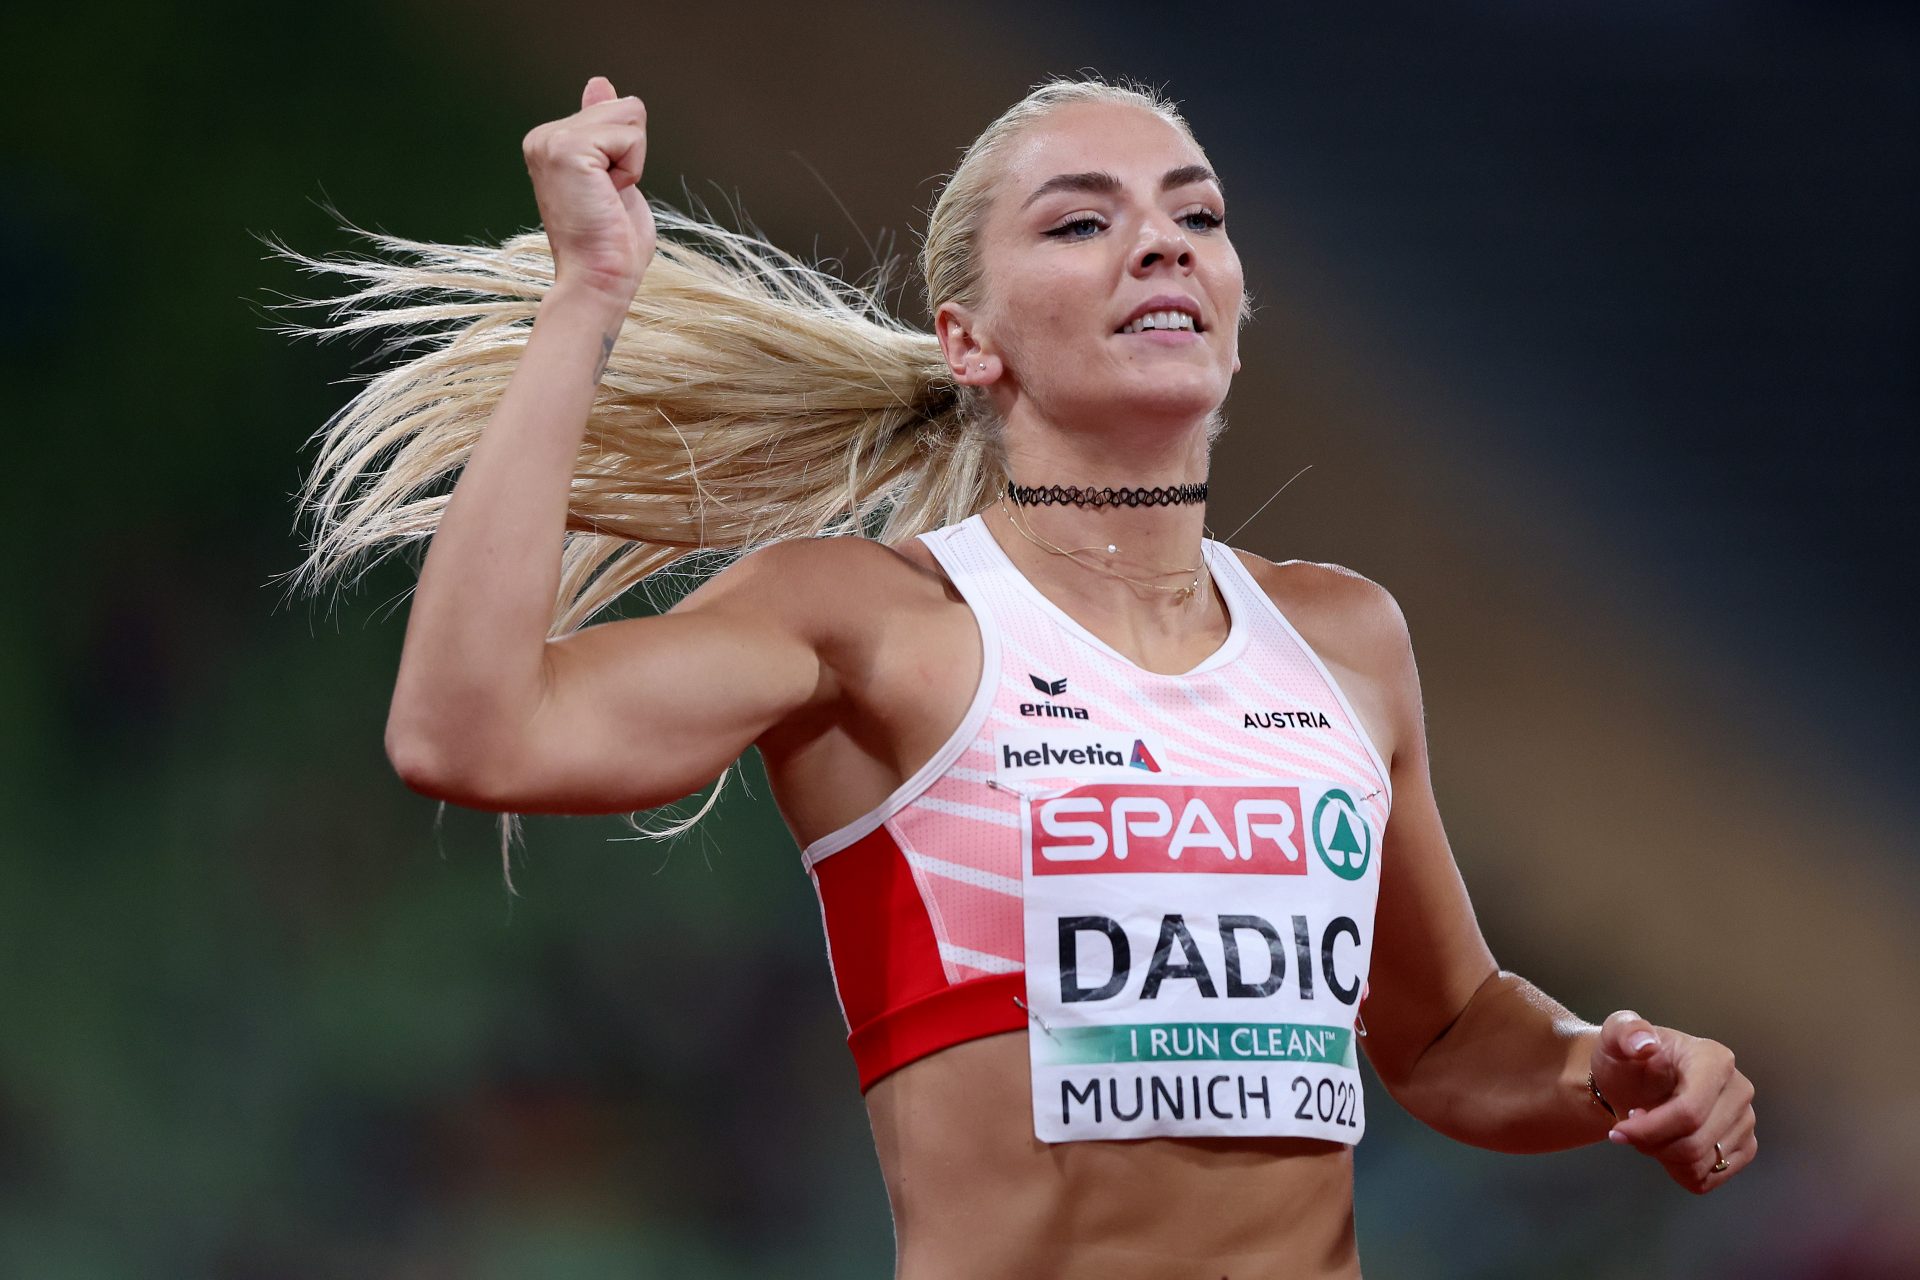 Who is Austrian heptathlon superstar Ivona Dadic?